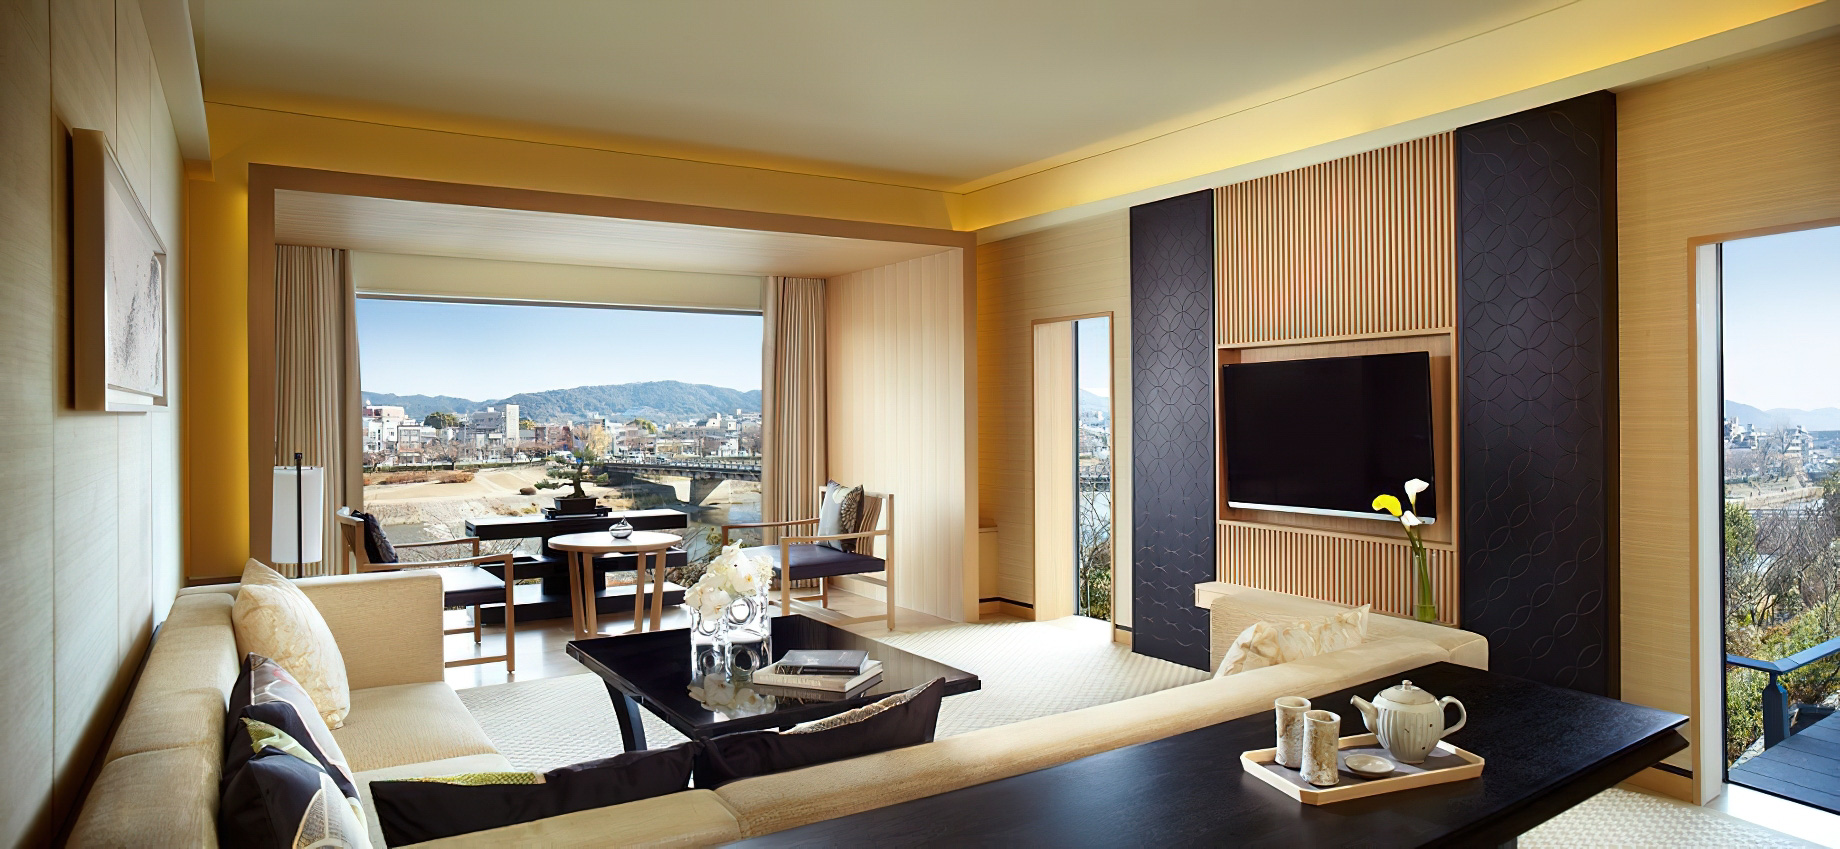 The Ritz-Carlton, Kyoto Hotel – Nakagyo Ward, Kyoto, Japan – Suite KAMOGAWA